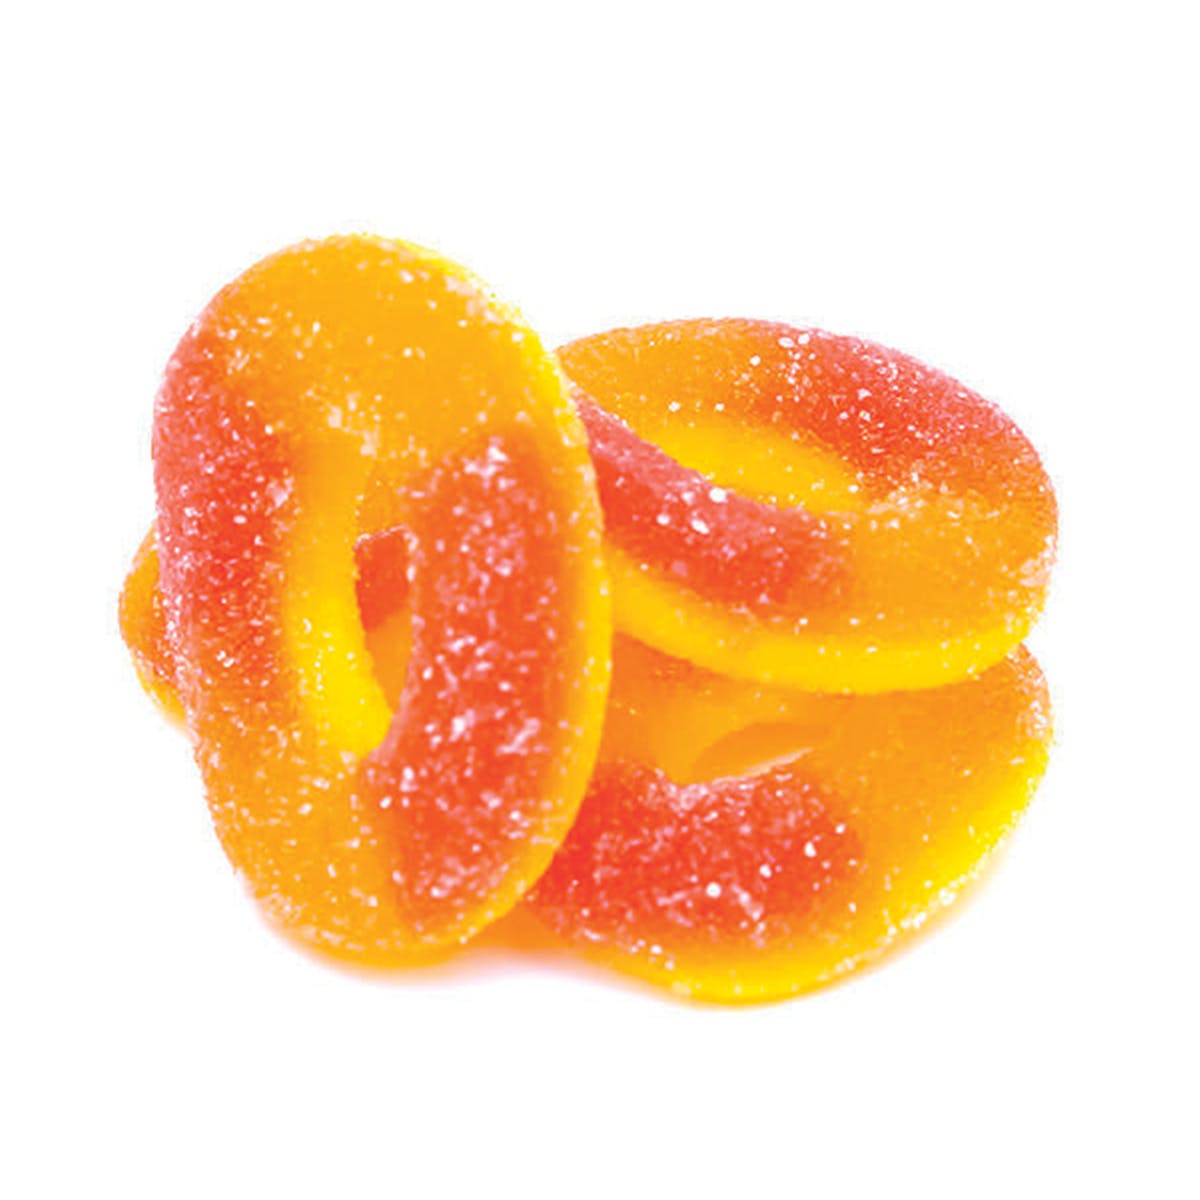 edible-peach-banana-rings-100mg